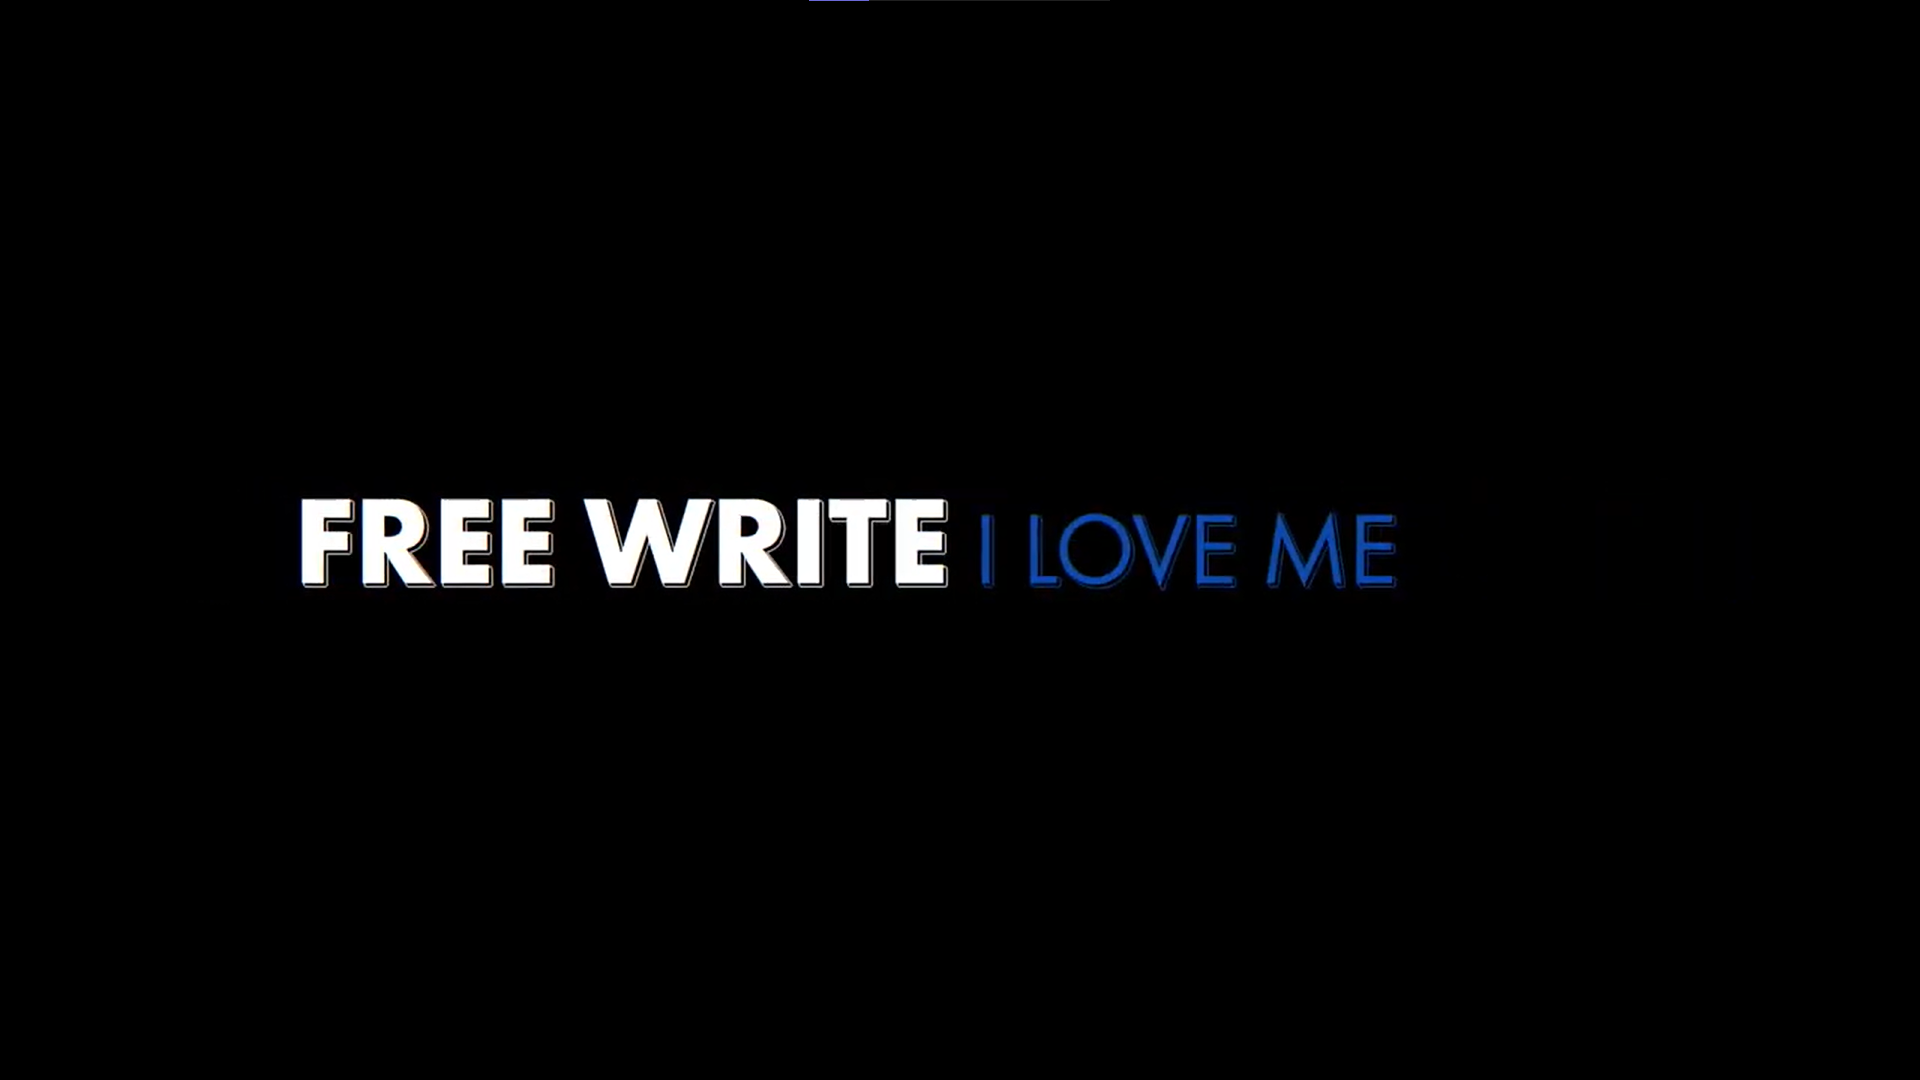 "I Love Me" Free Write Title Card